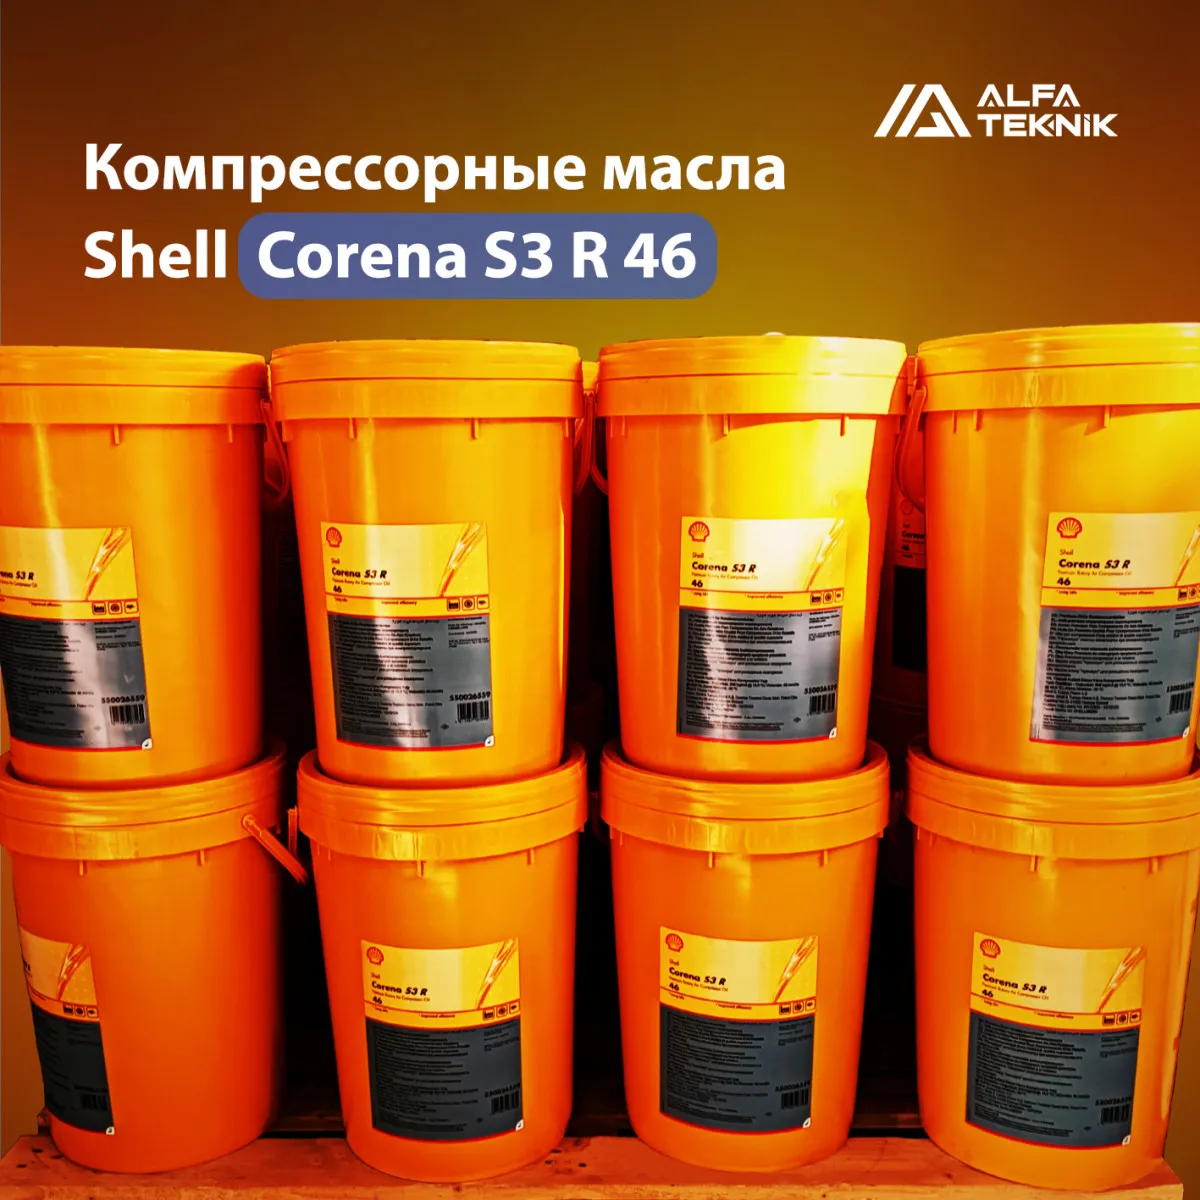 Компрессорные масла Shell Corena R46#1